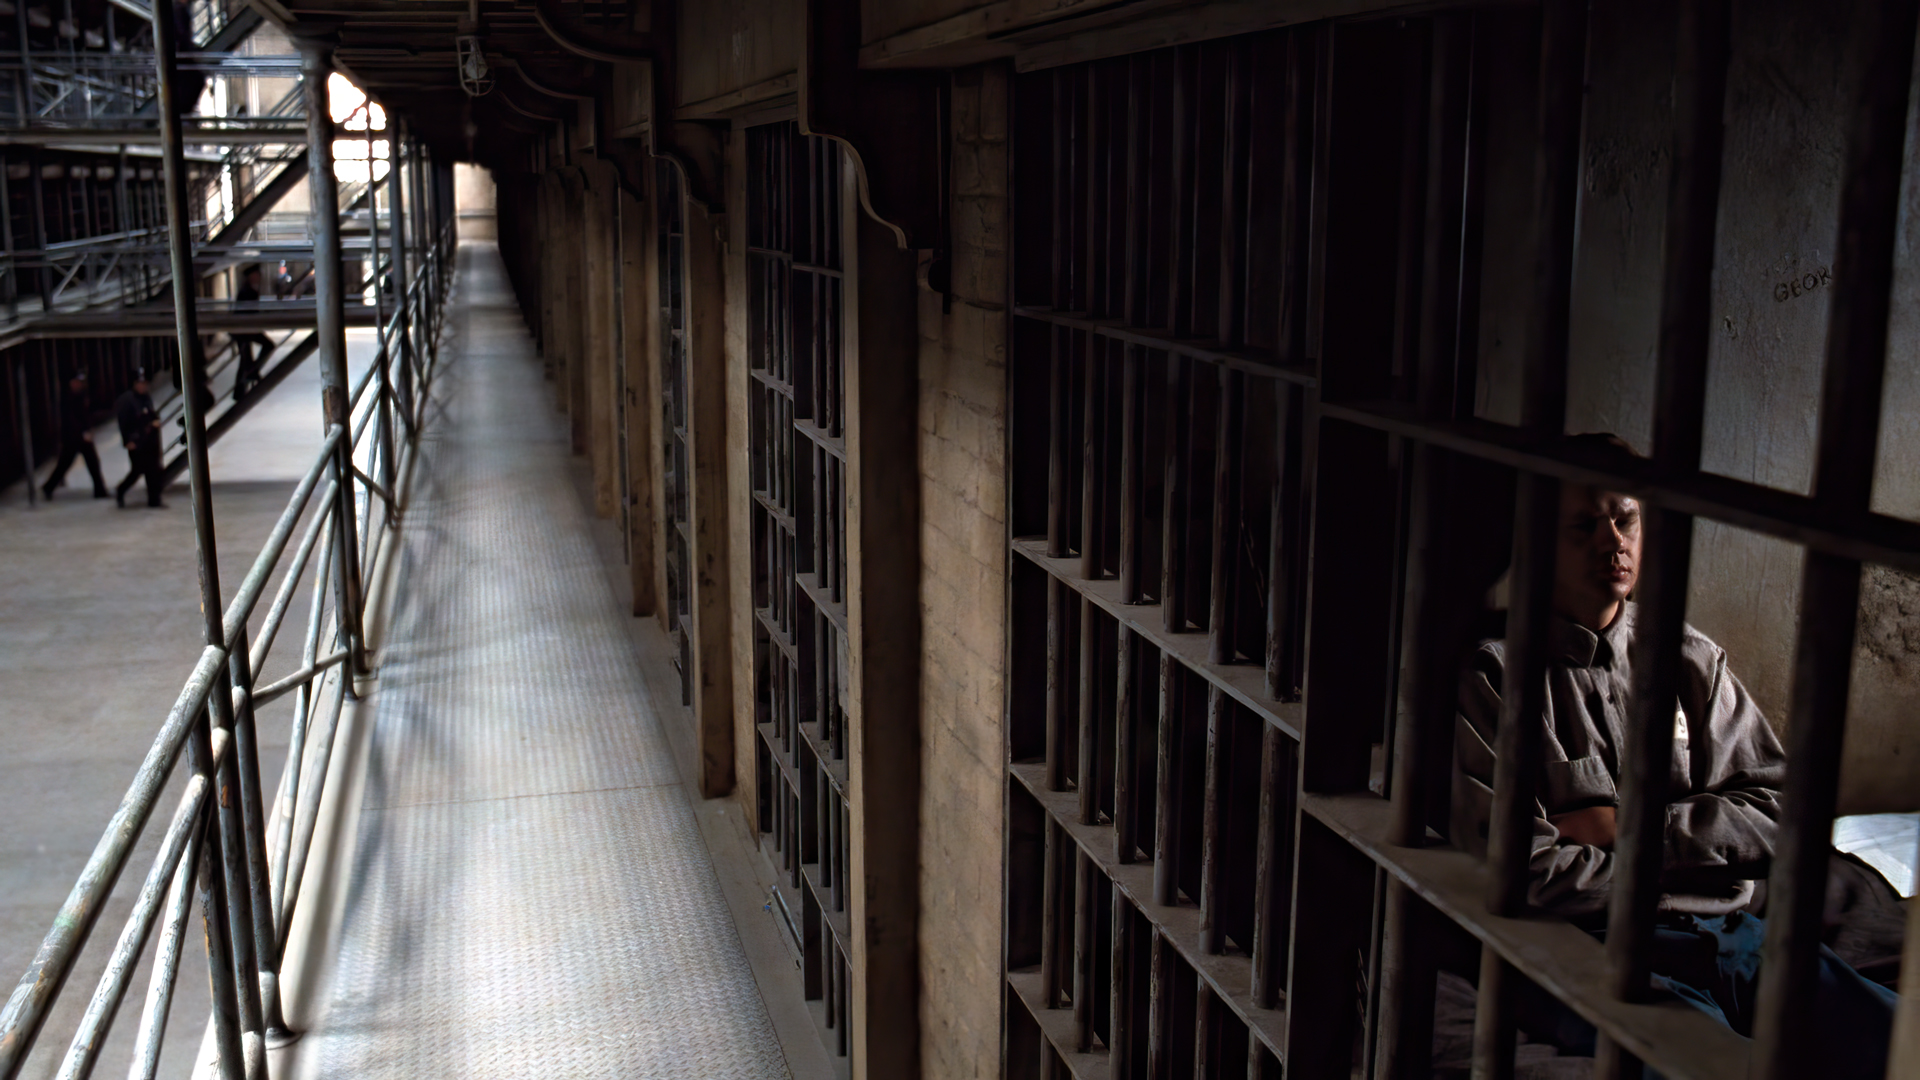 People 1920x1080 The Shawshank Redemption movies film stills prison cell Tim Robbins Andy Dufresne Stephen King prison prisoners